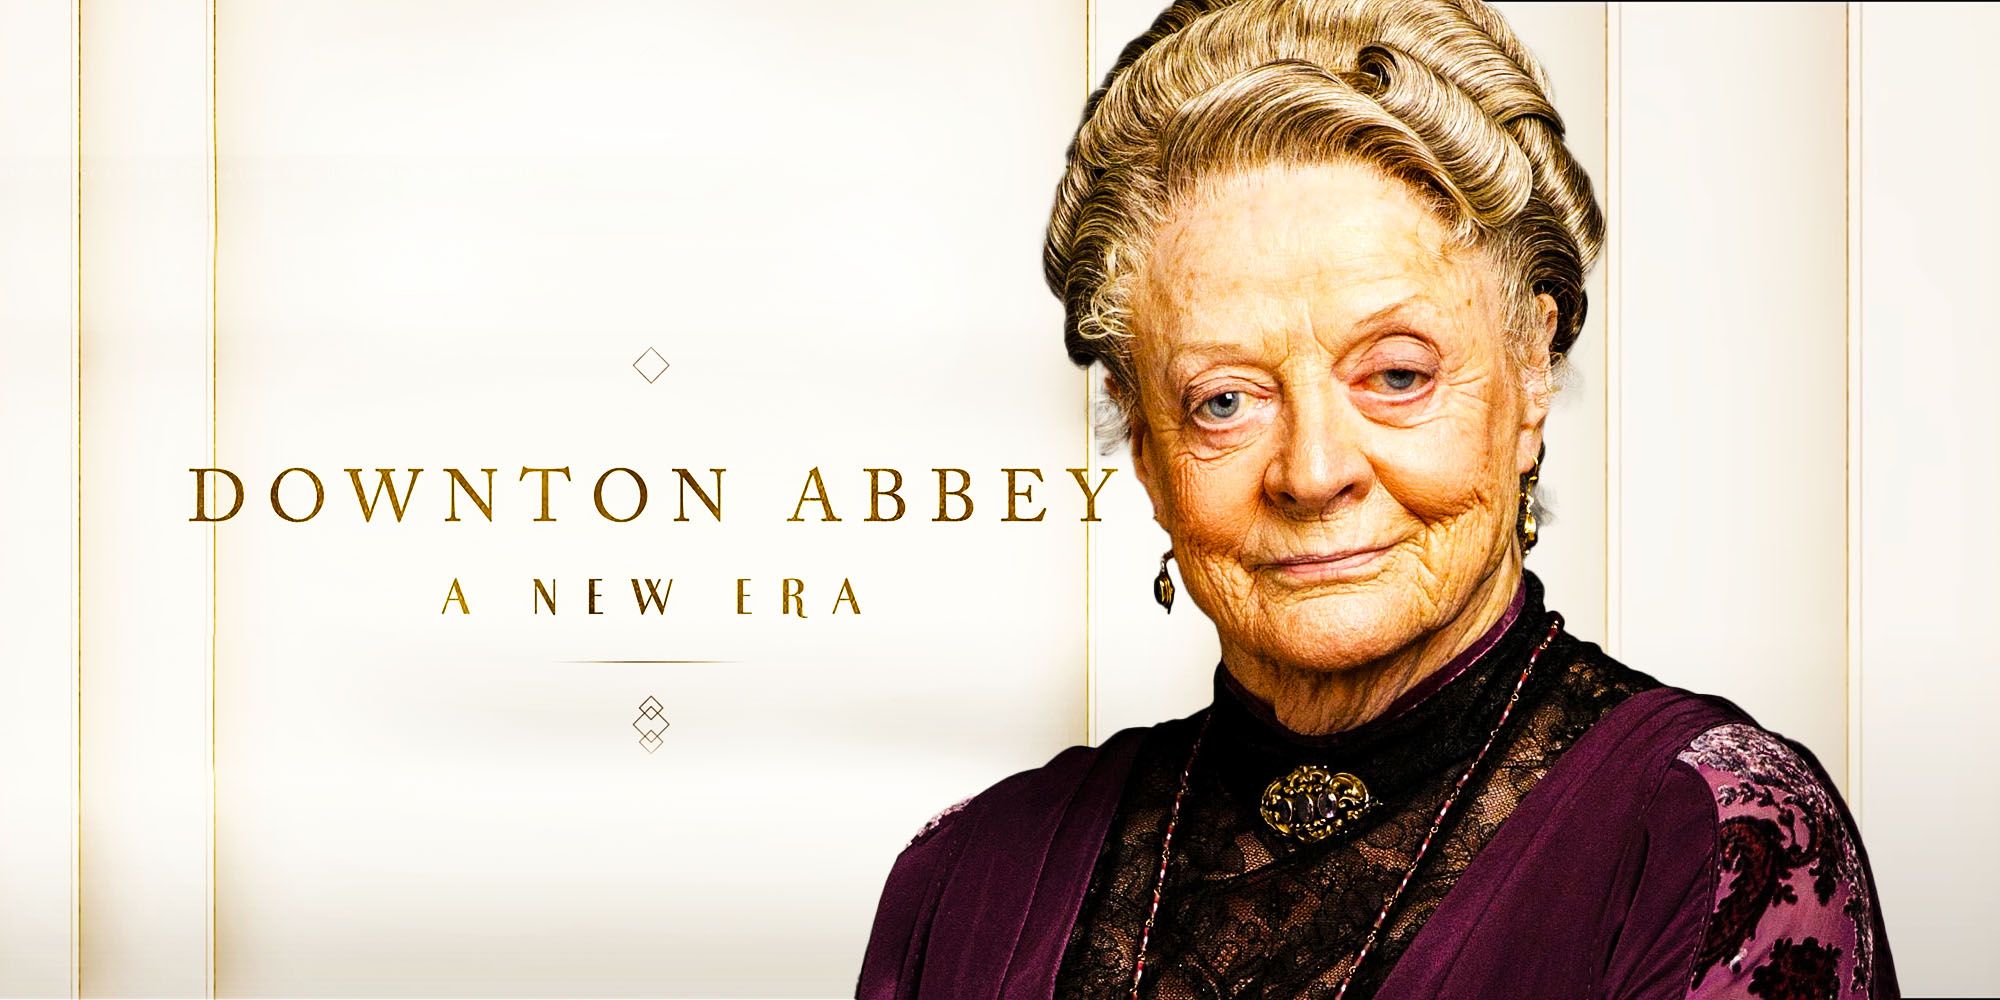 Downton abbey a new era tragic set up lady grantham death violet